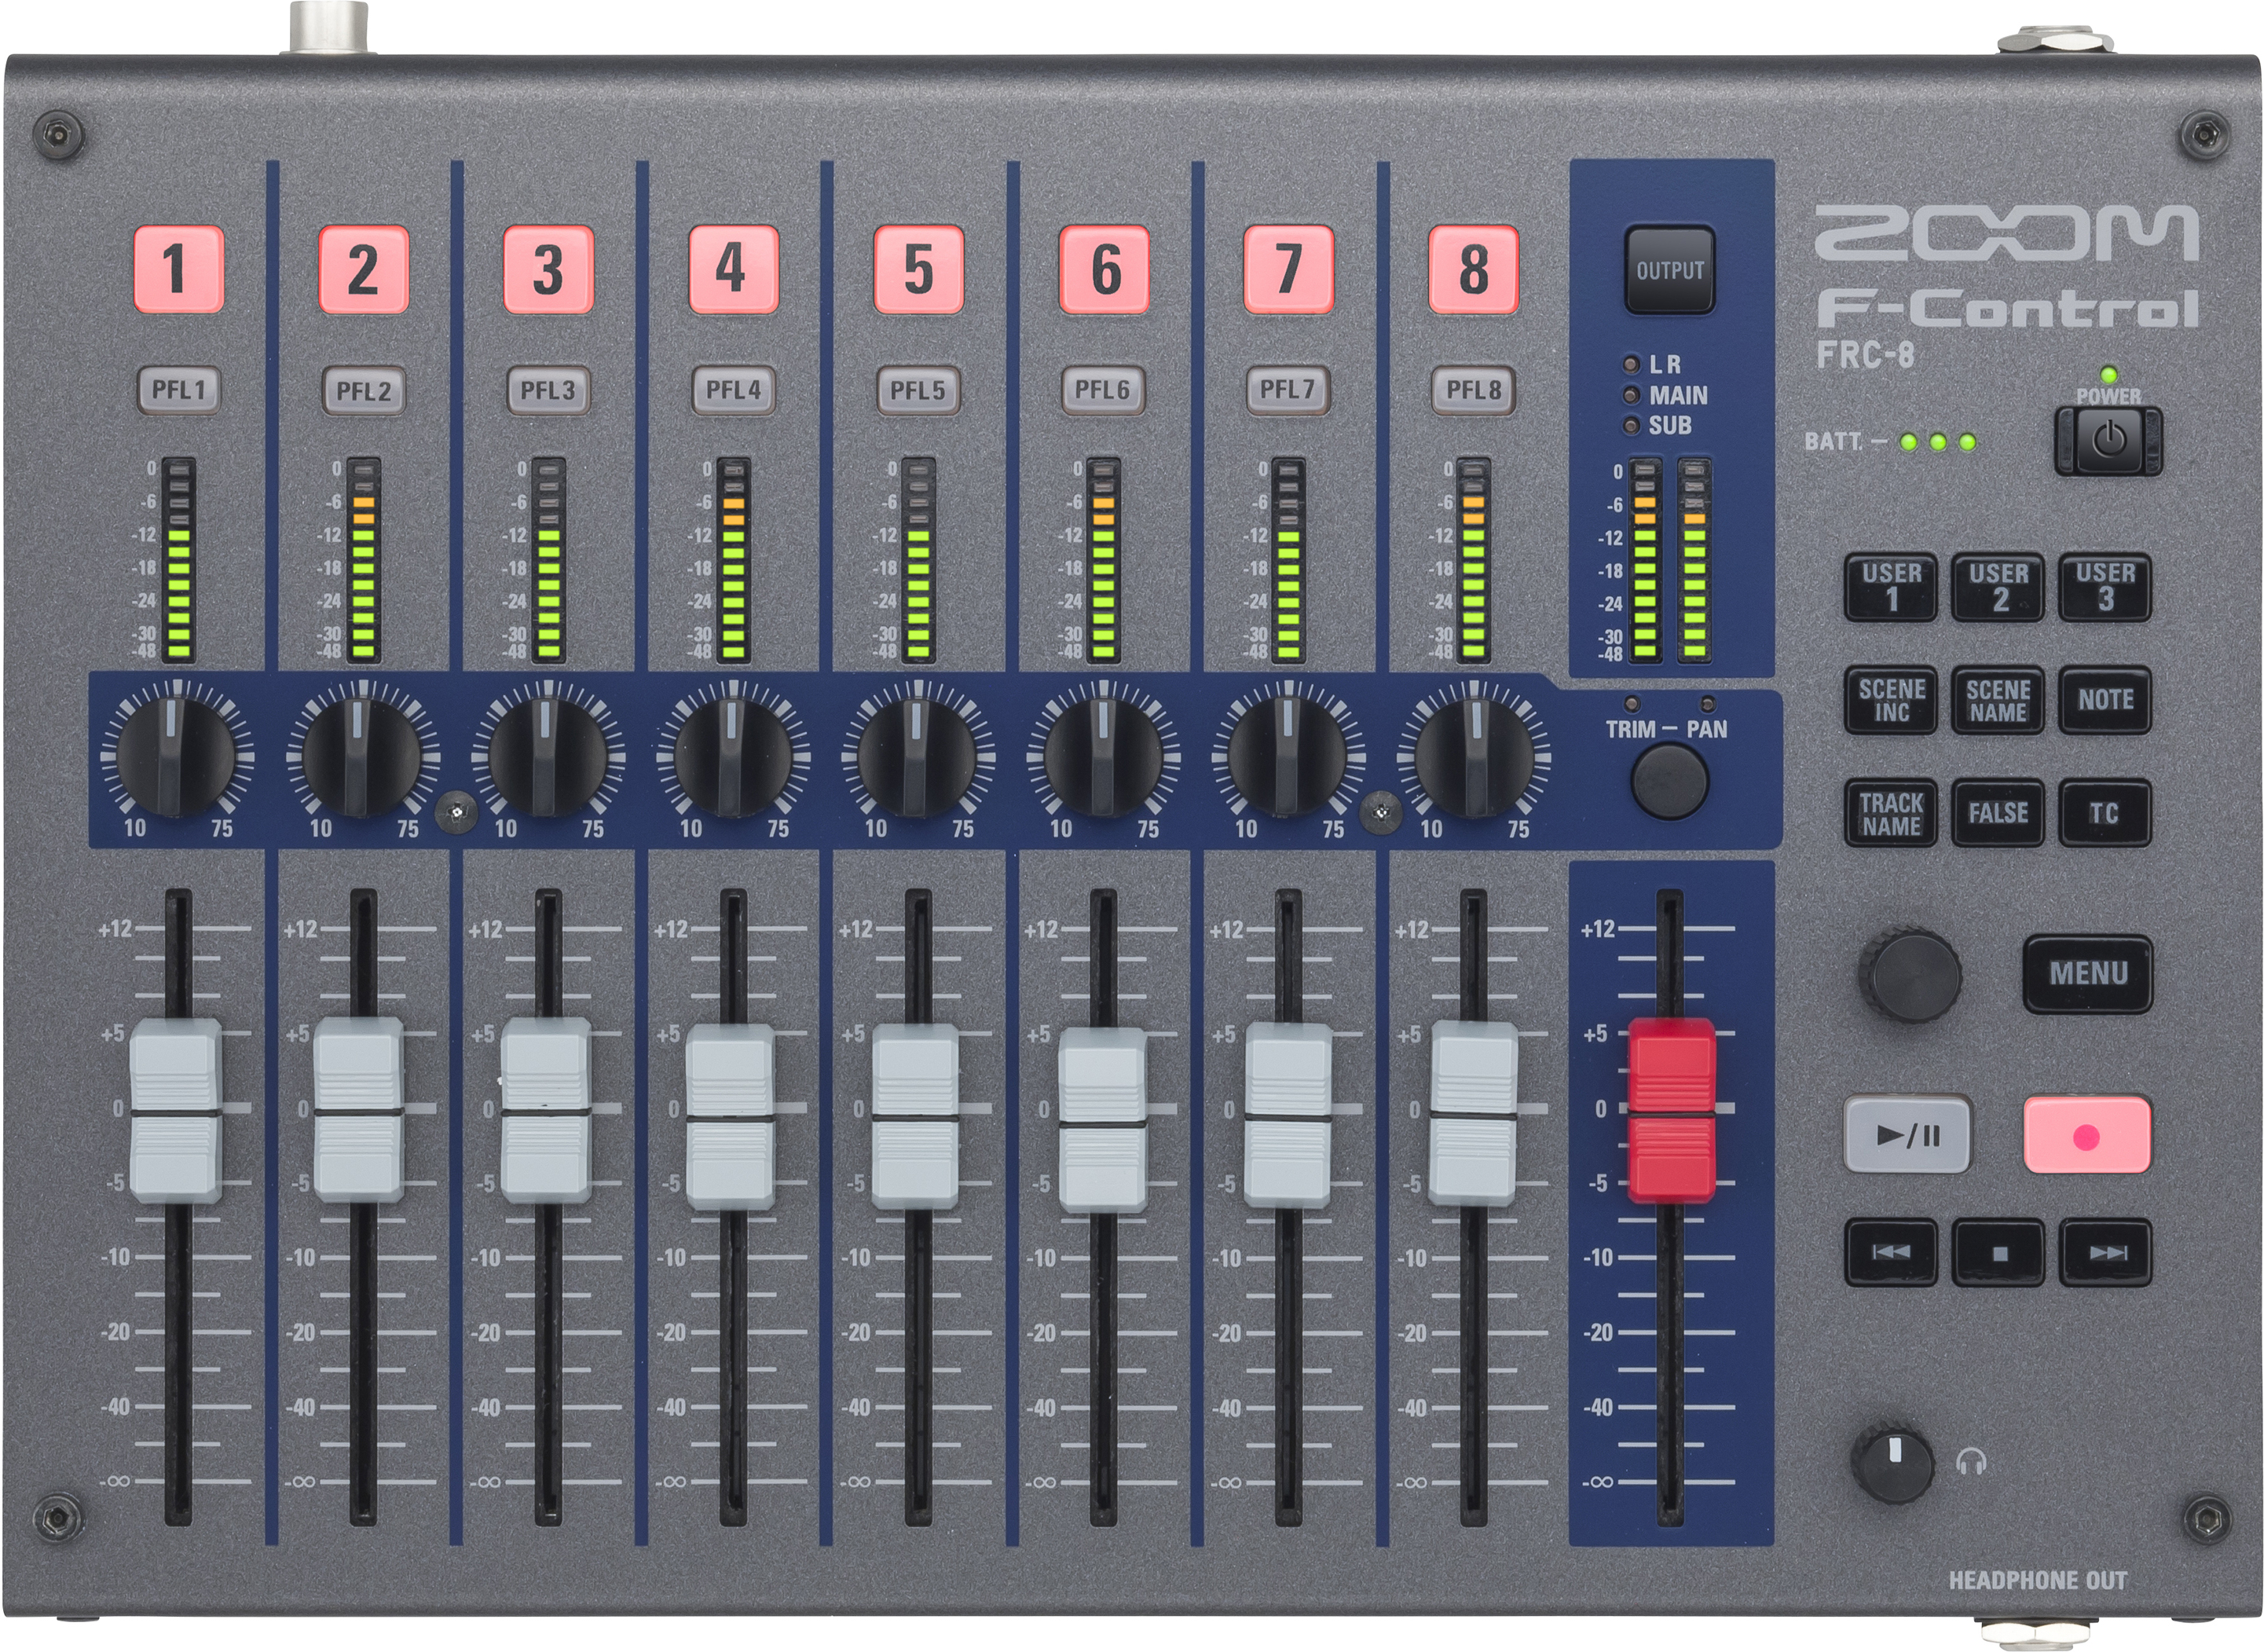 Zoom F-control Frc-8 - Multi tracks recorder - Main picture